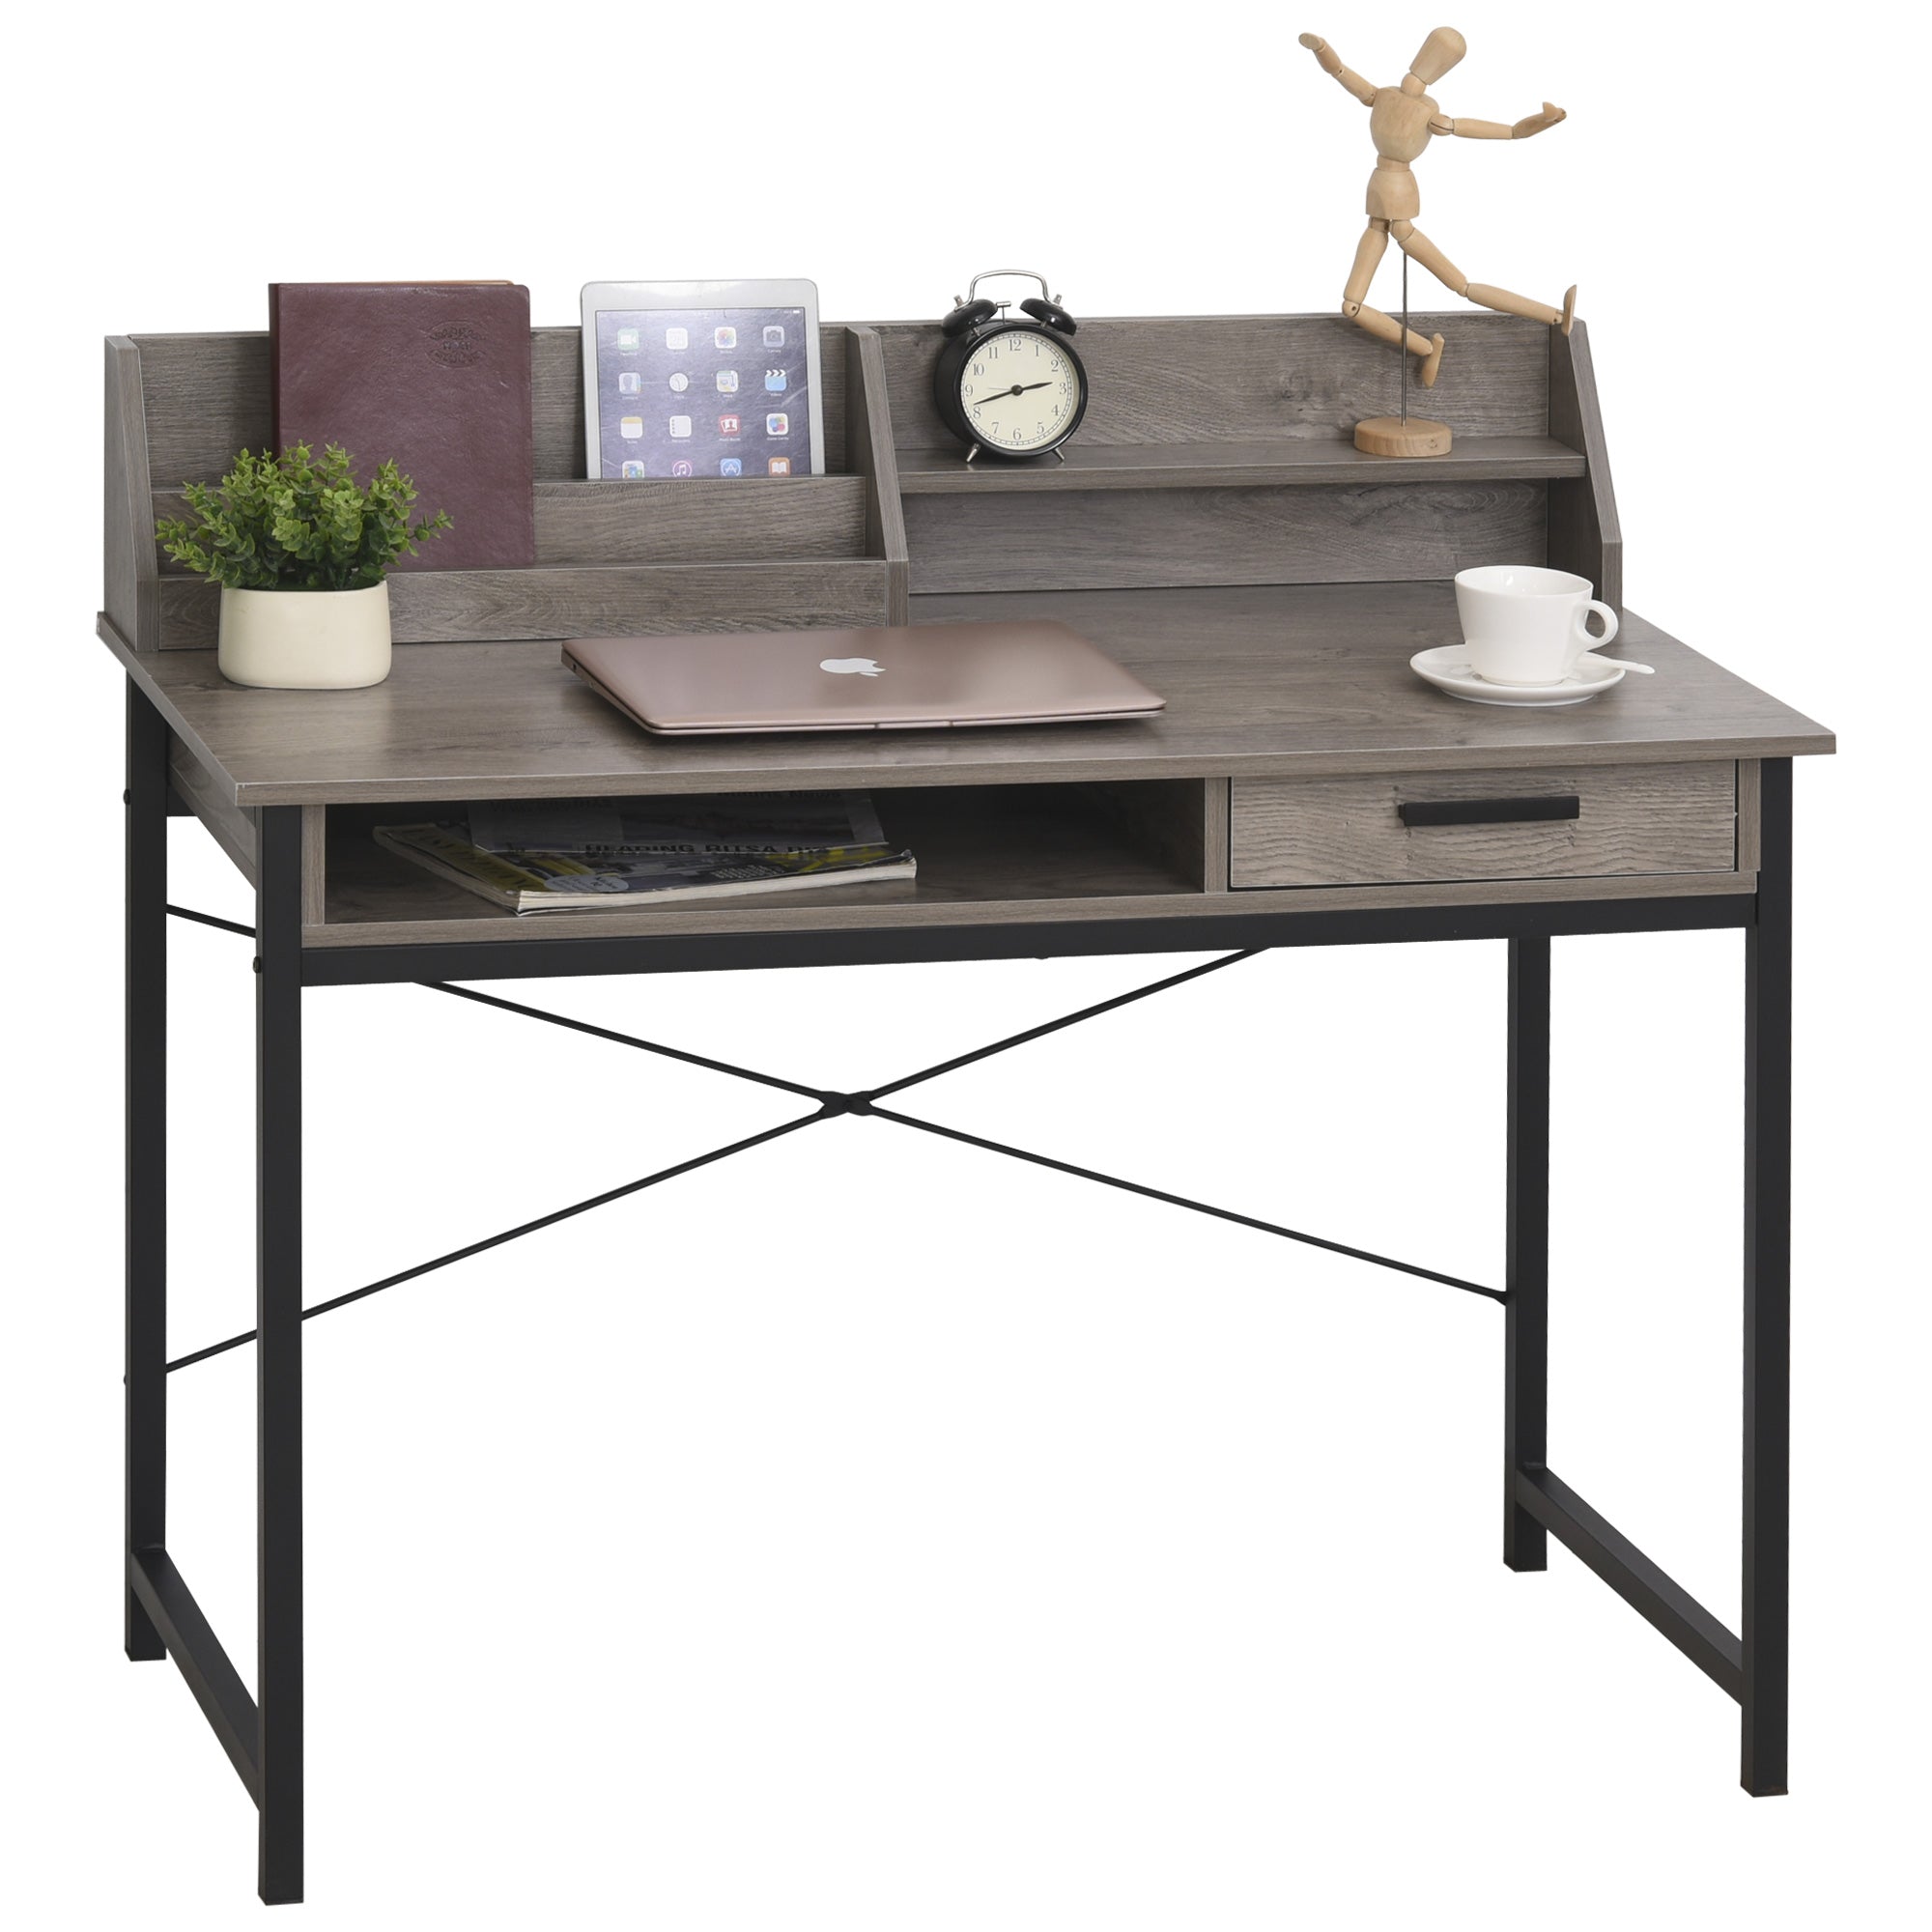 Nancy's Warrensburg Desk - Computer table - Storage space - Office table - Drawer - Industrial - MDF - Gray - Black